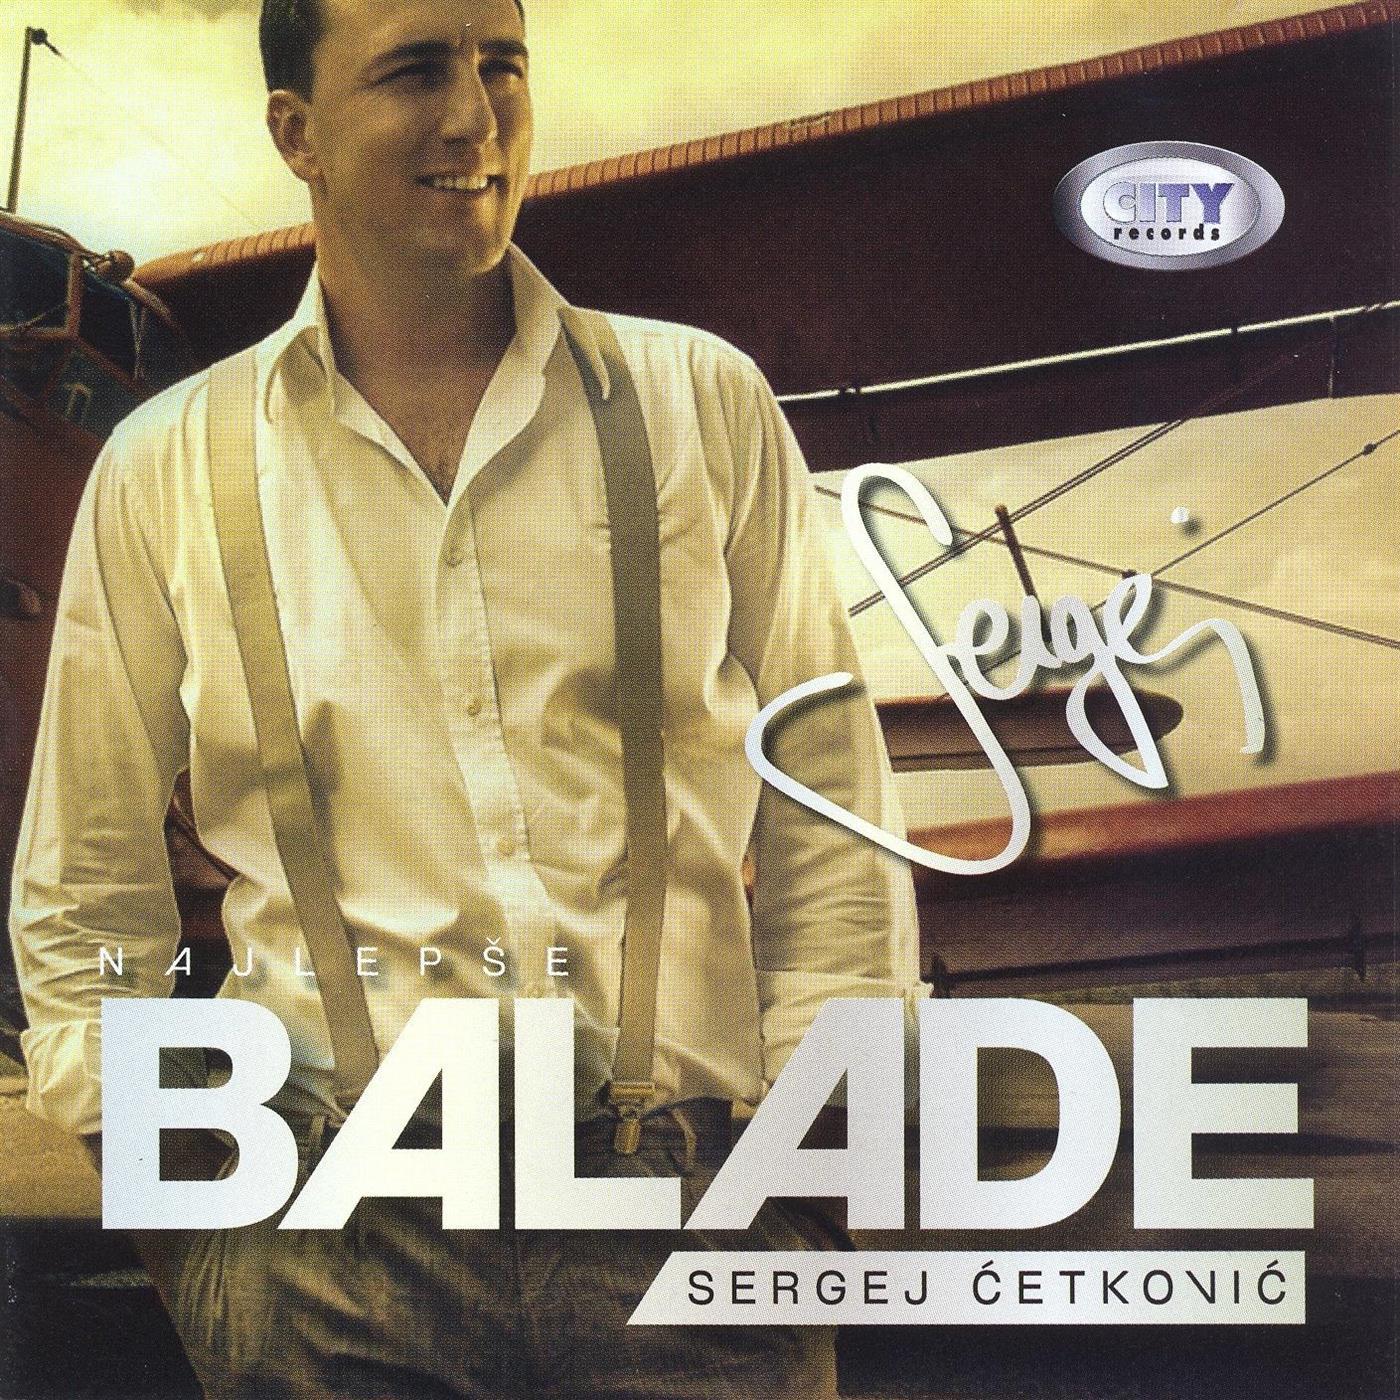 Sergej Cetkovic - Najlepse Balade